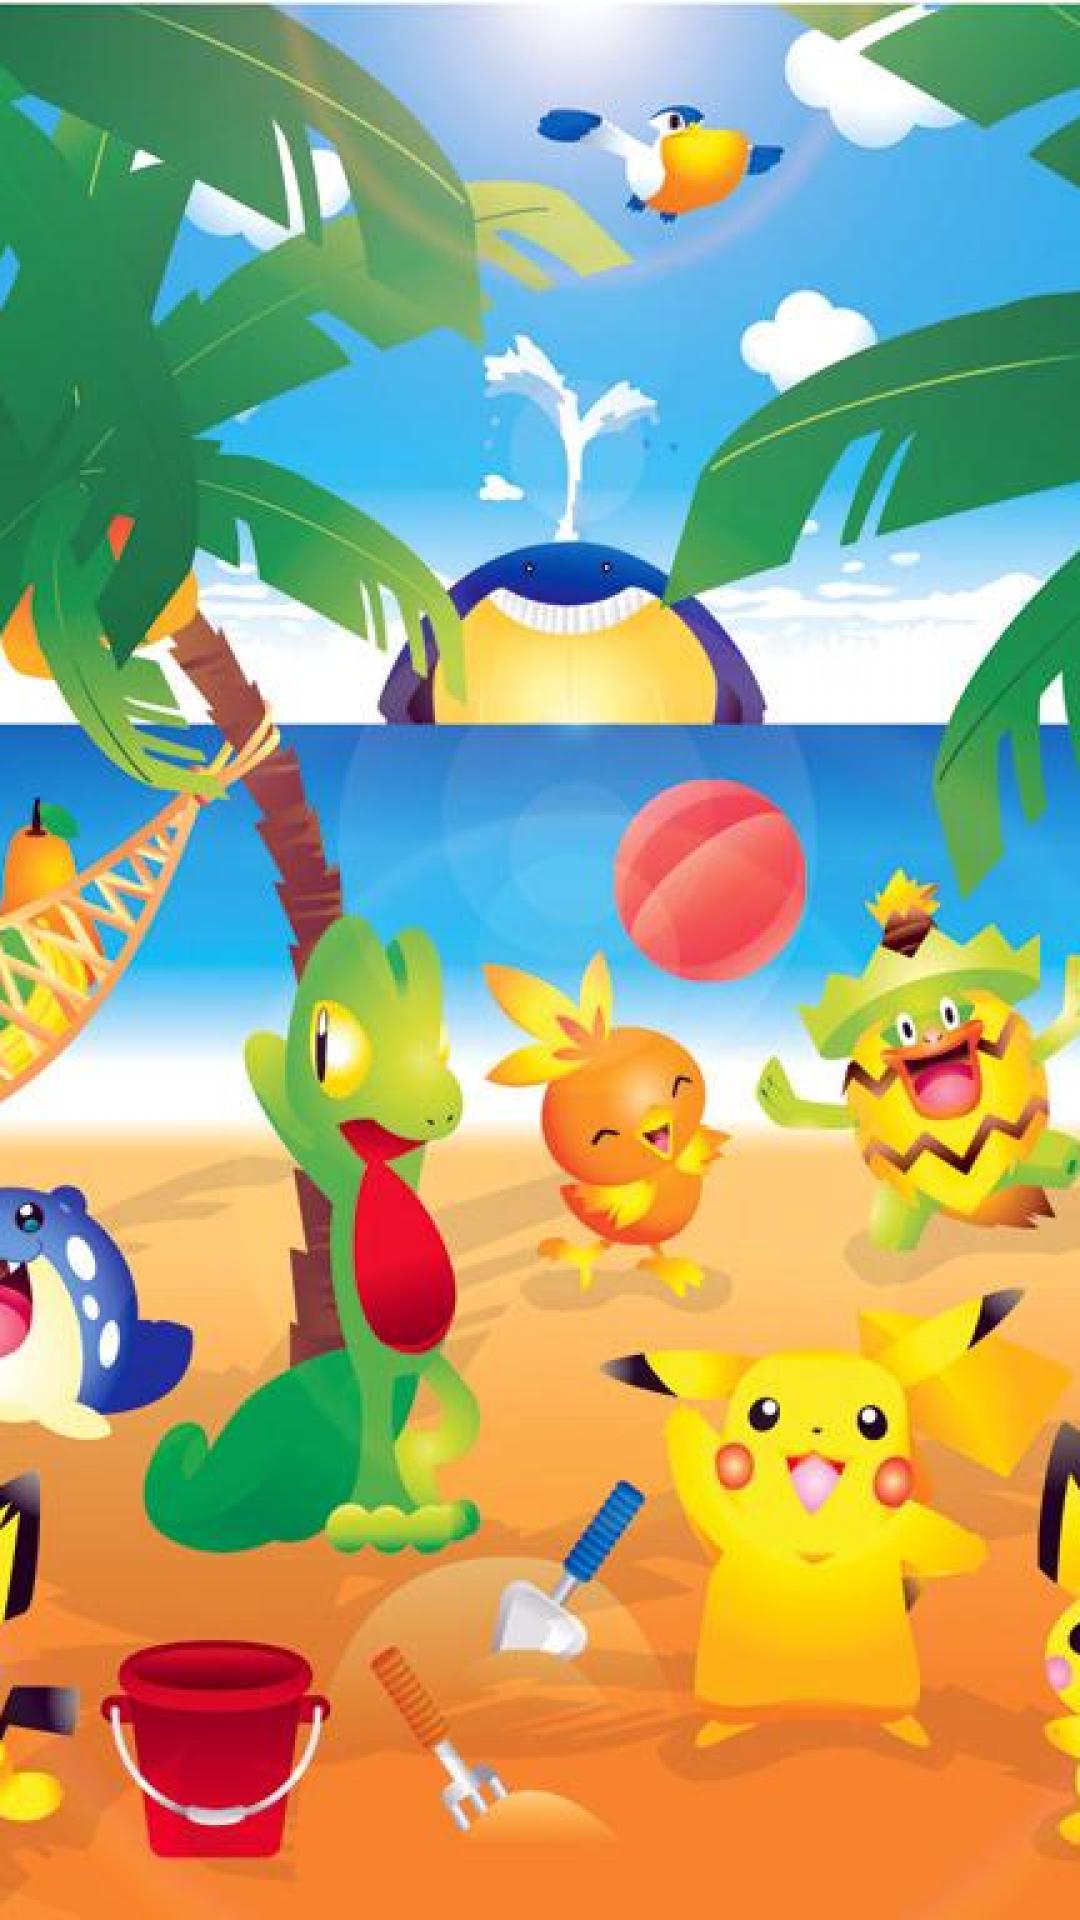 Free Pokemon iPhone Wallpapers | PixelsTalk.Net